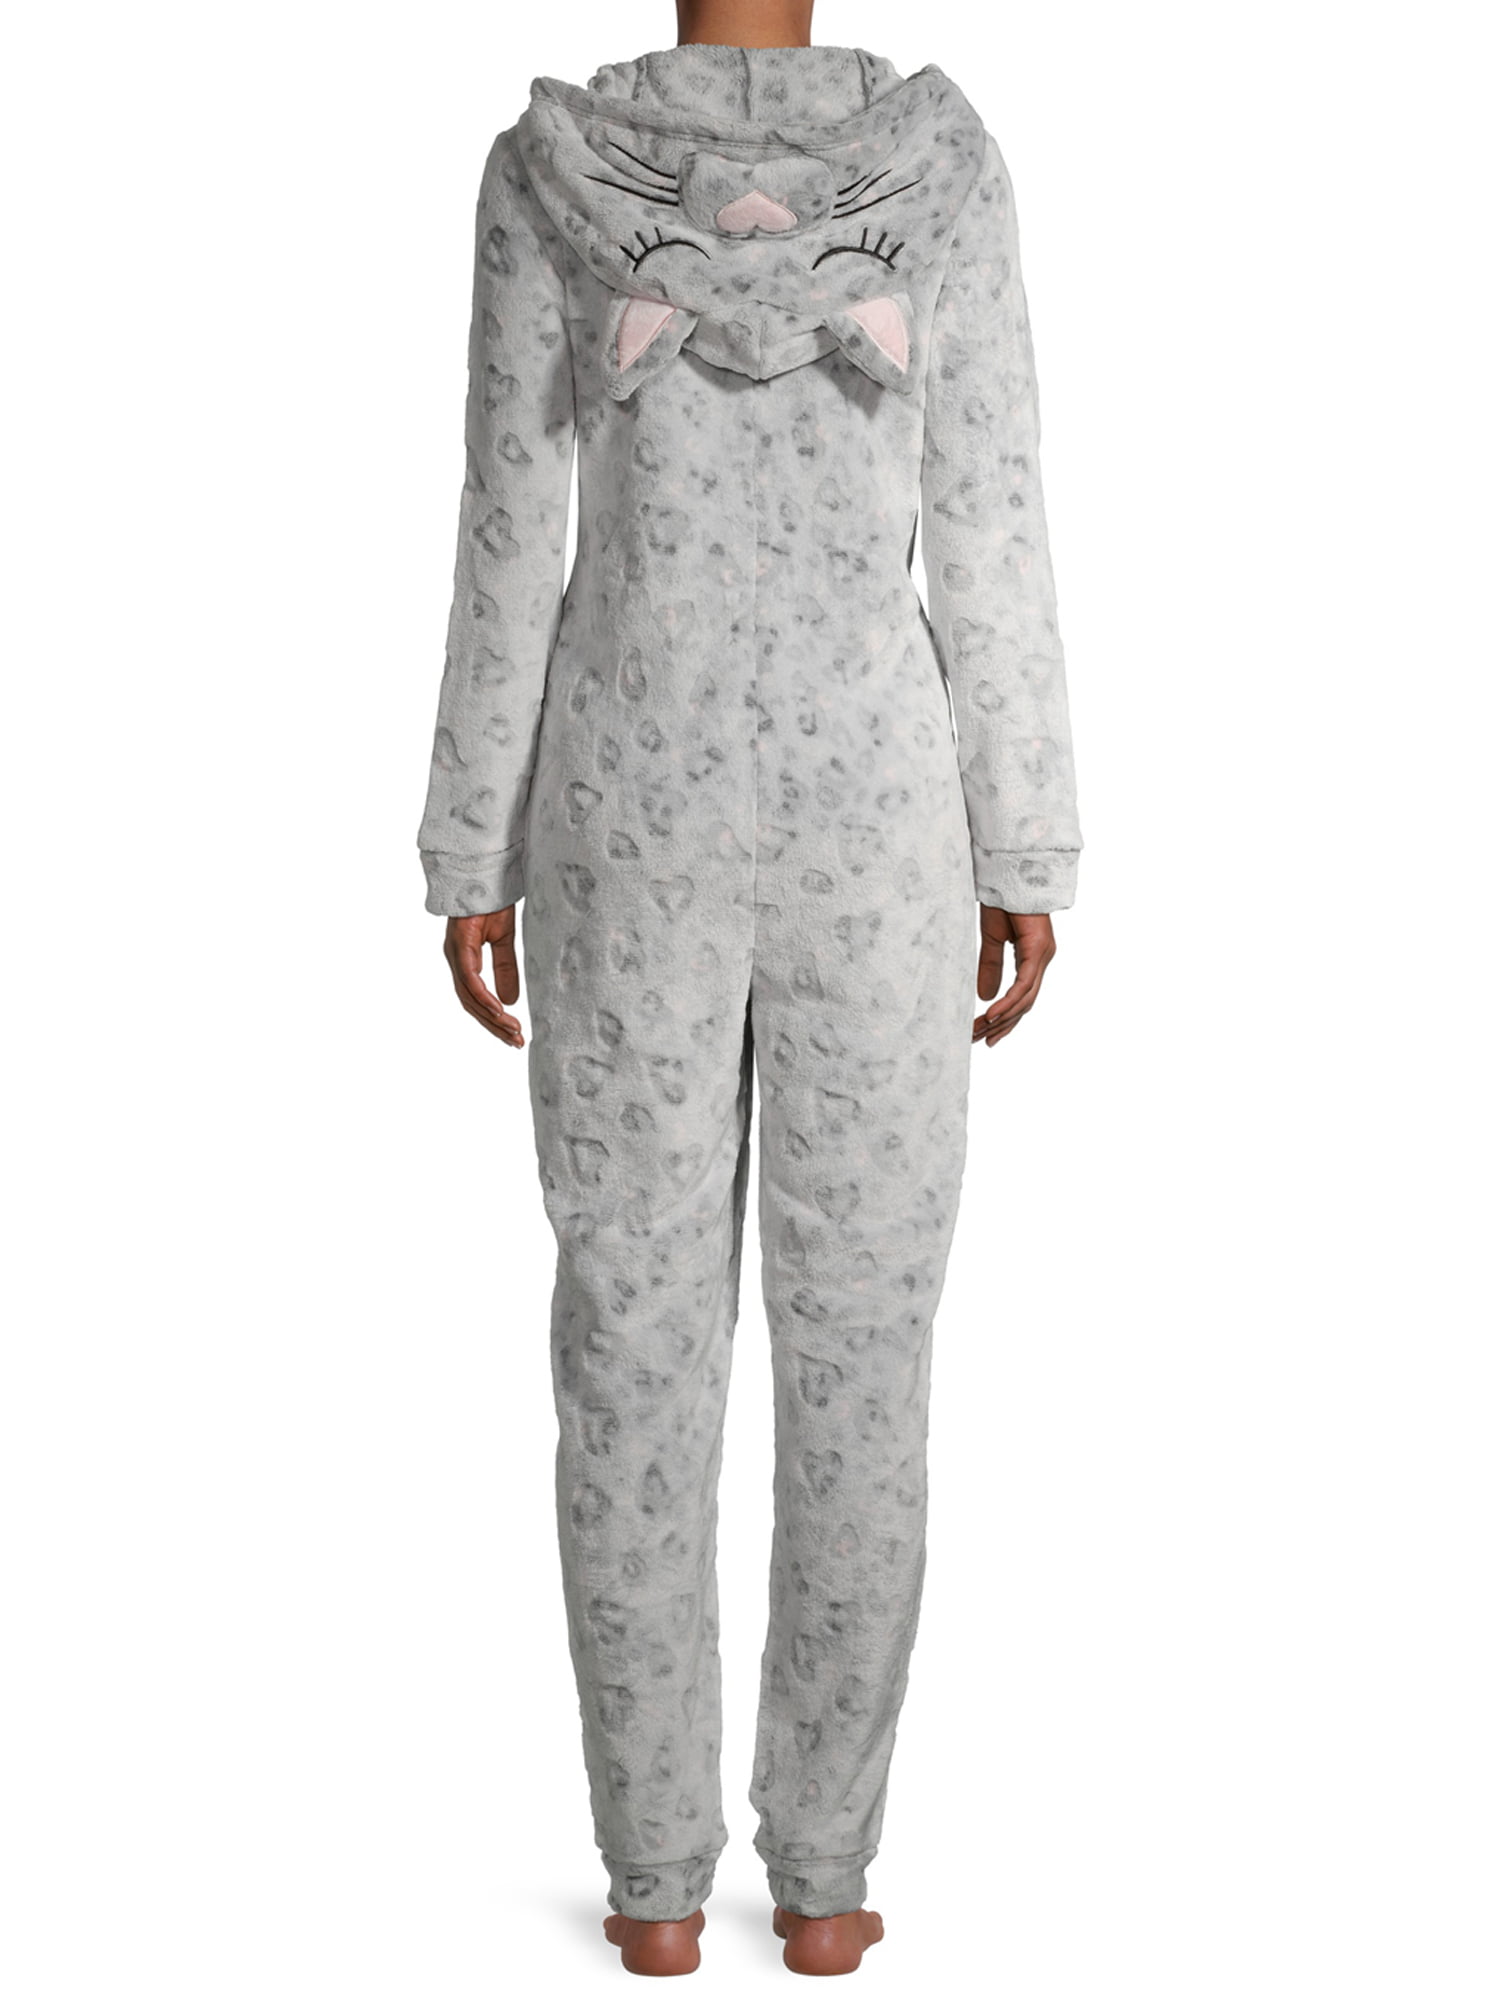 Peace, Love & Dreams Women's Grey Cat Print Pajama Union Suit